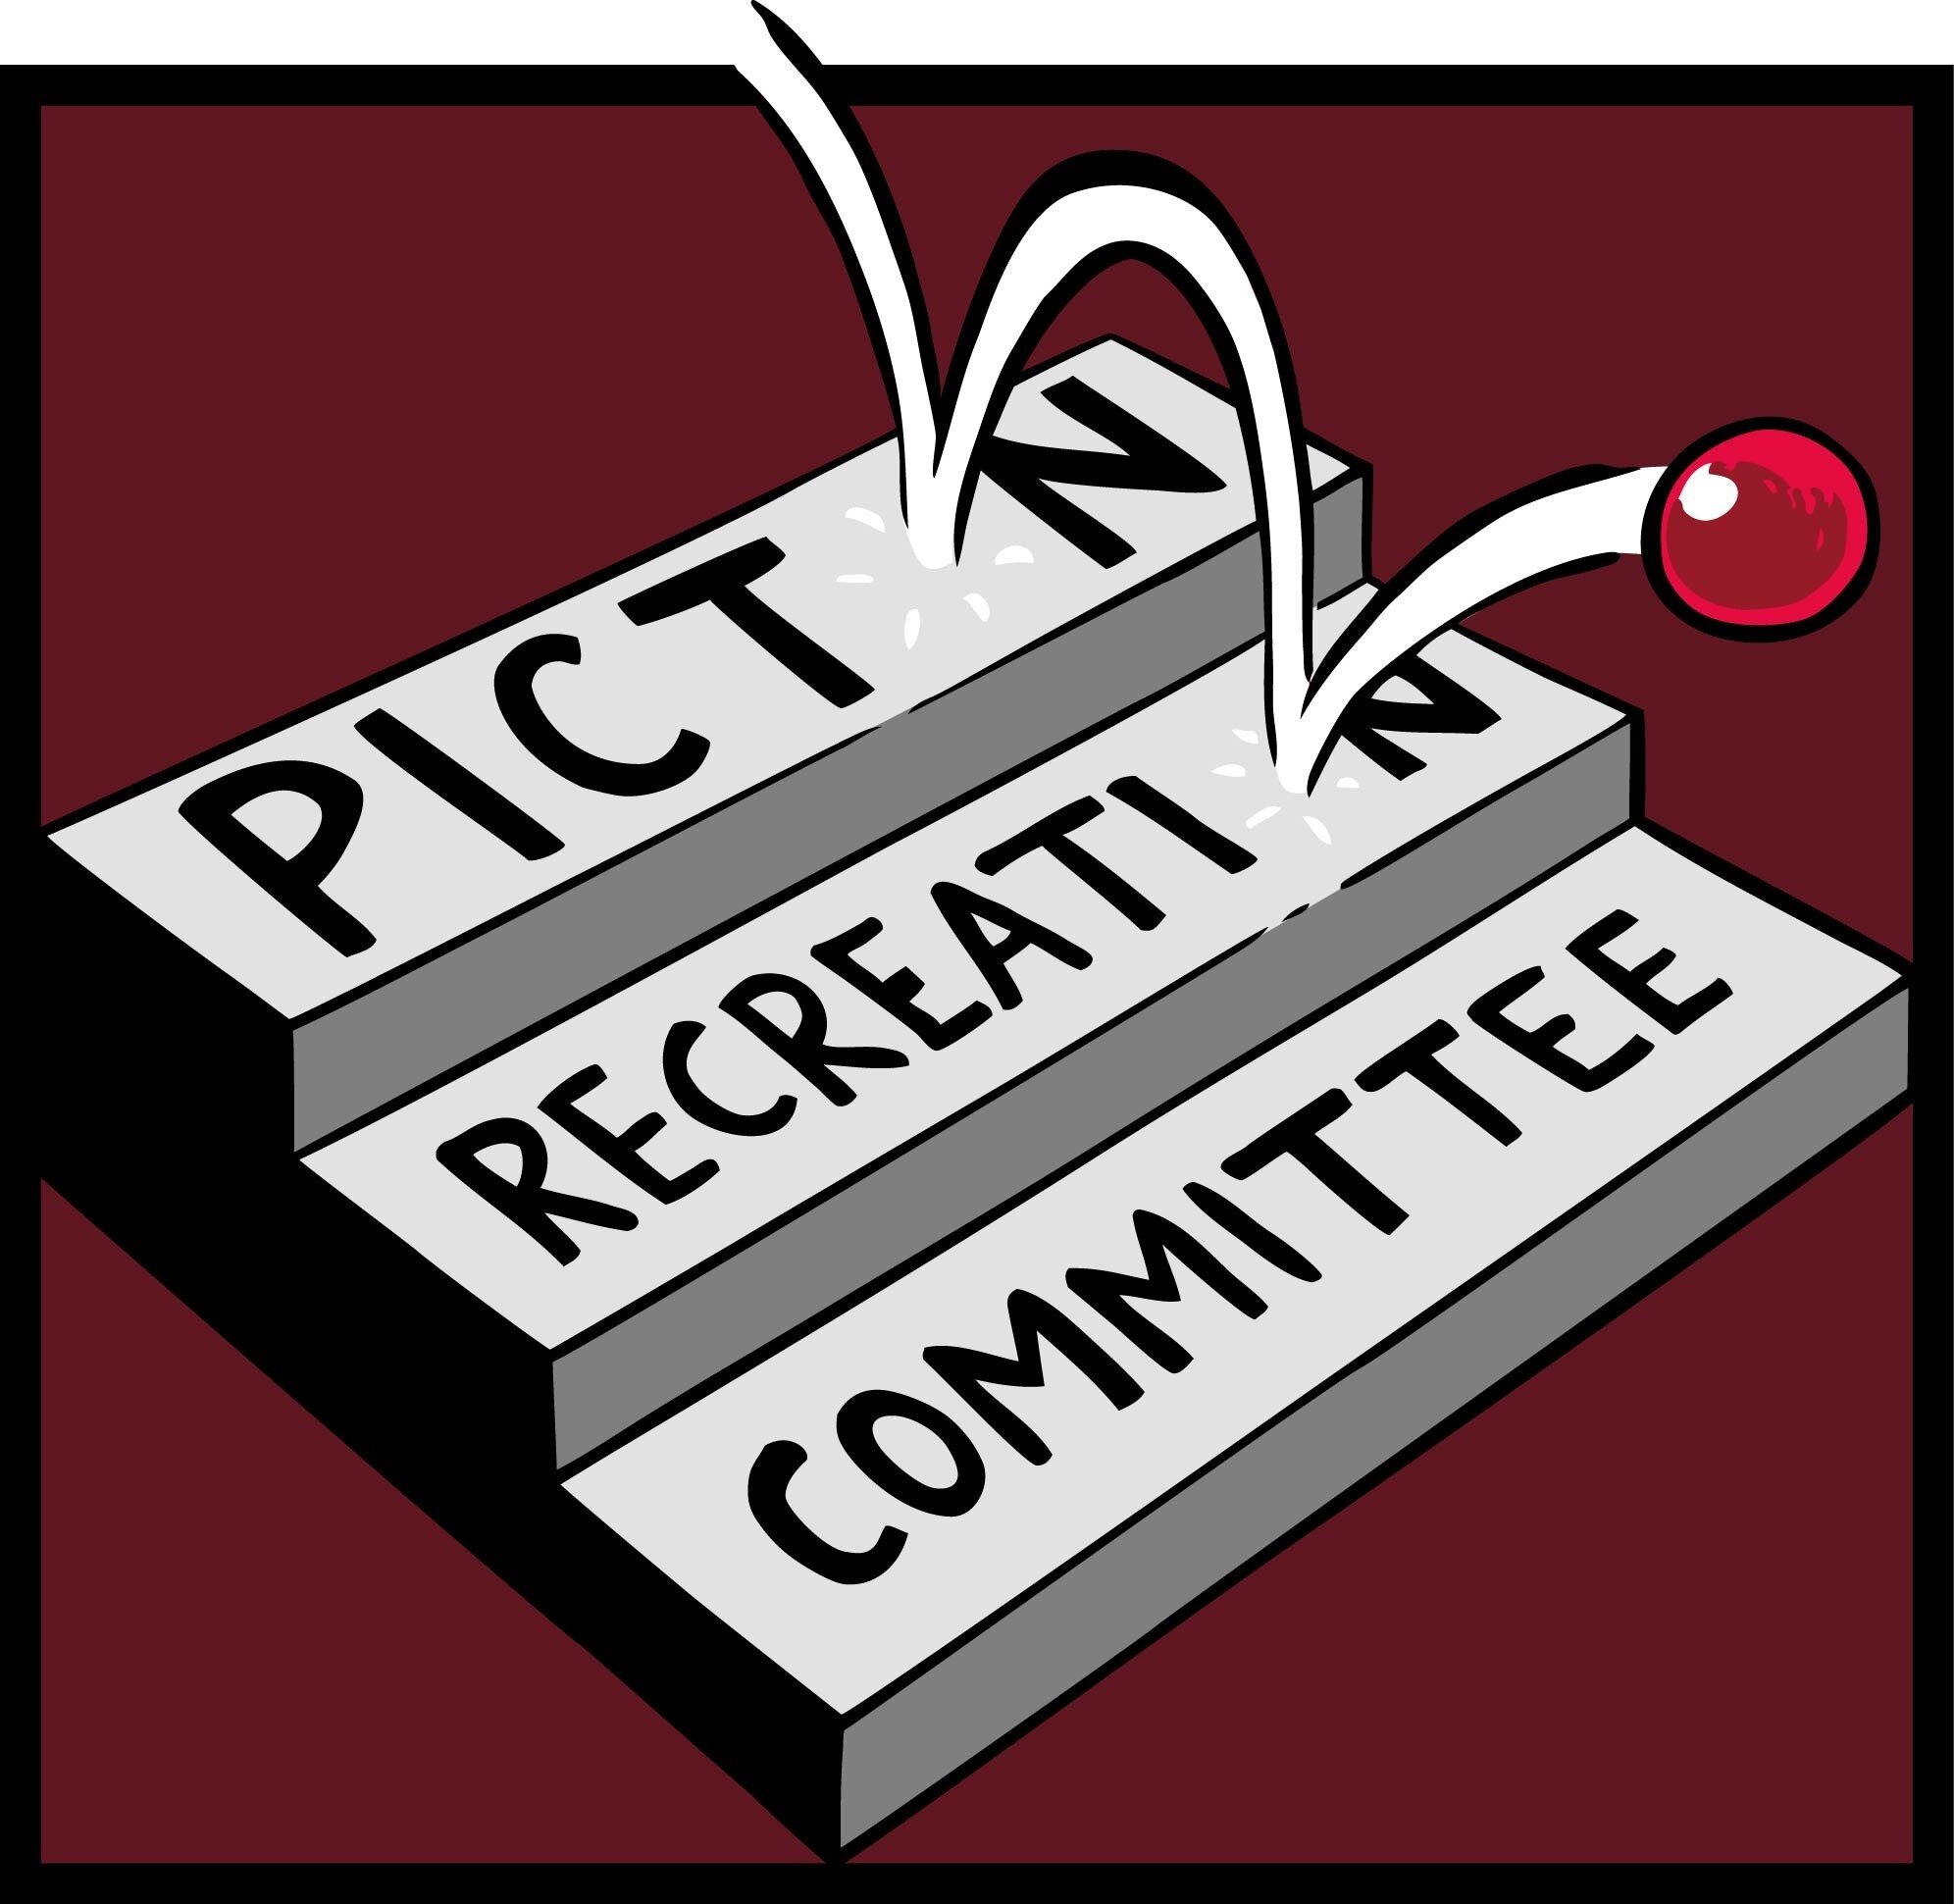 Picton Recreation Committee logo